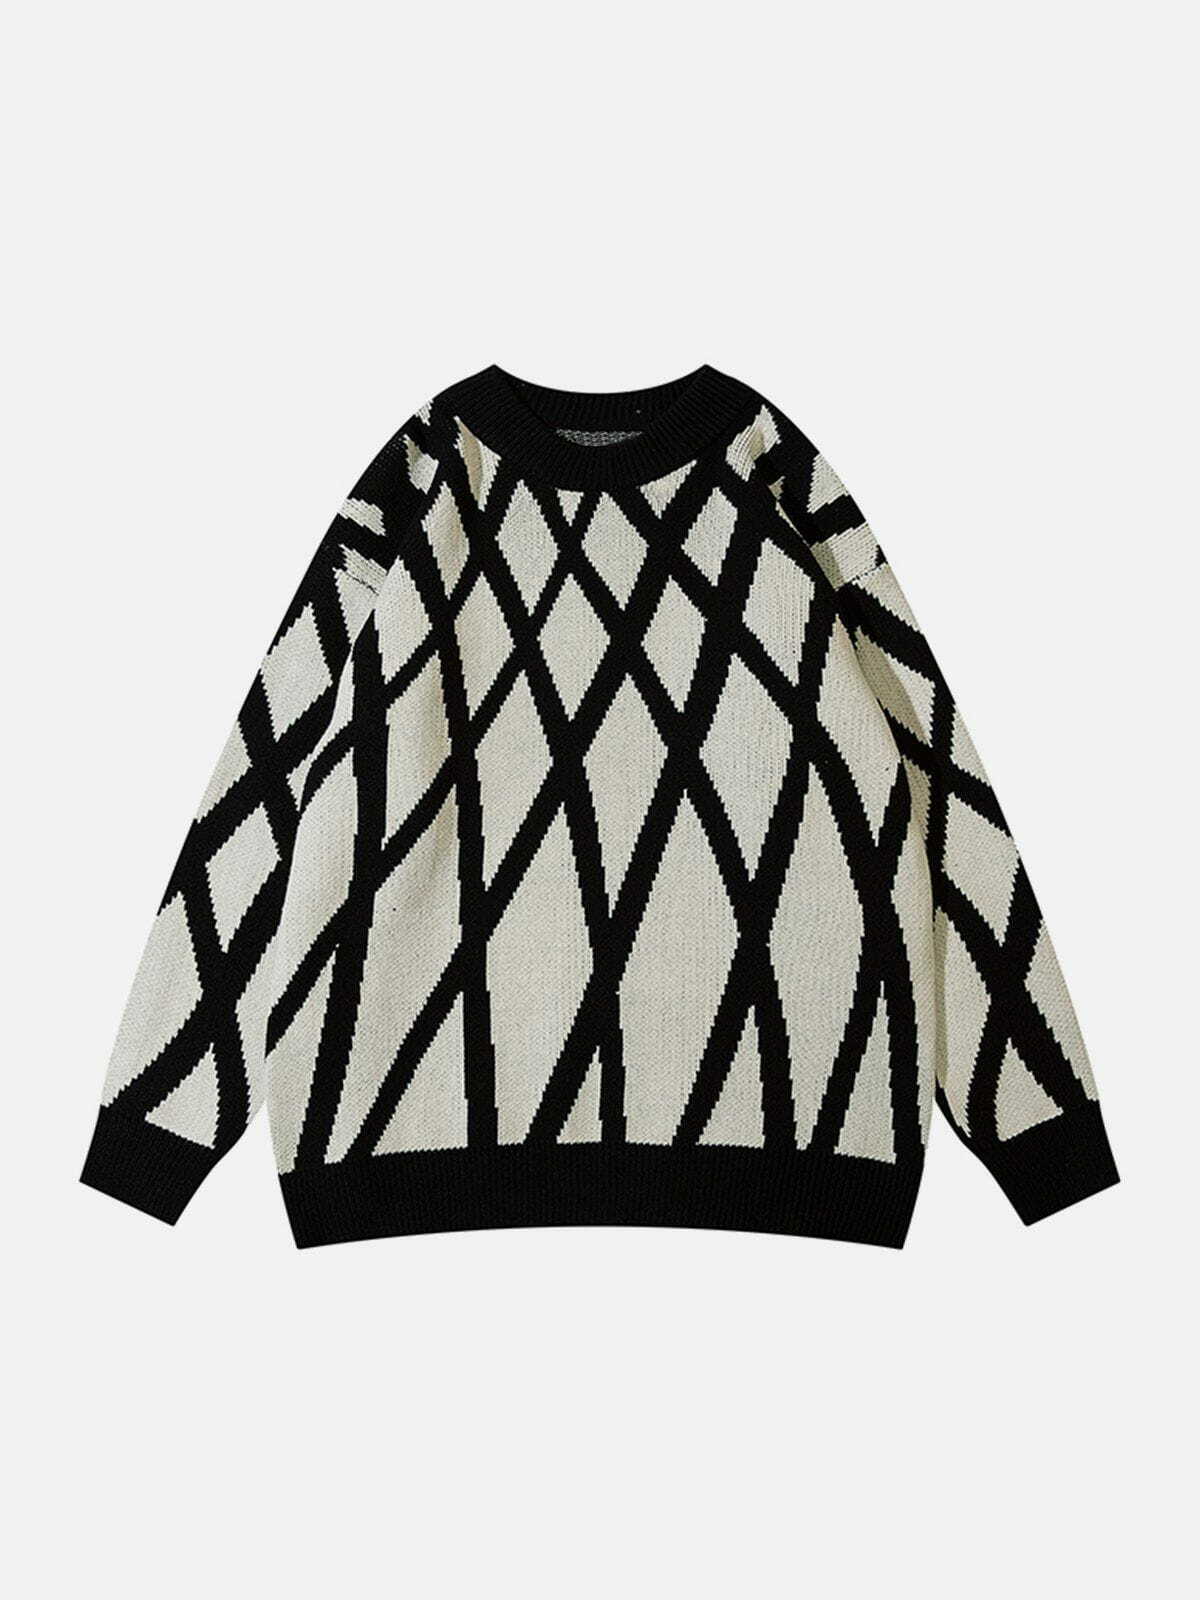 mesh jacquard knit sweater edgy retro streetwear 8775